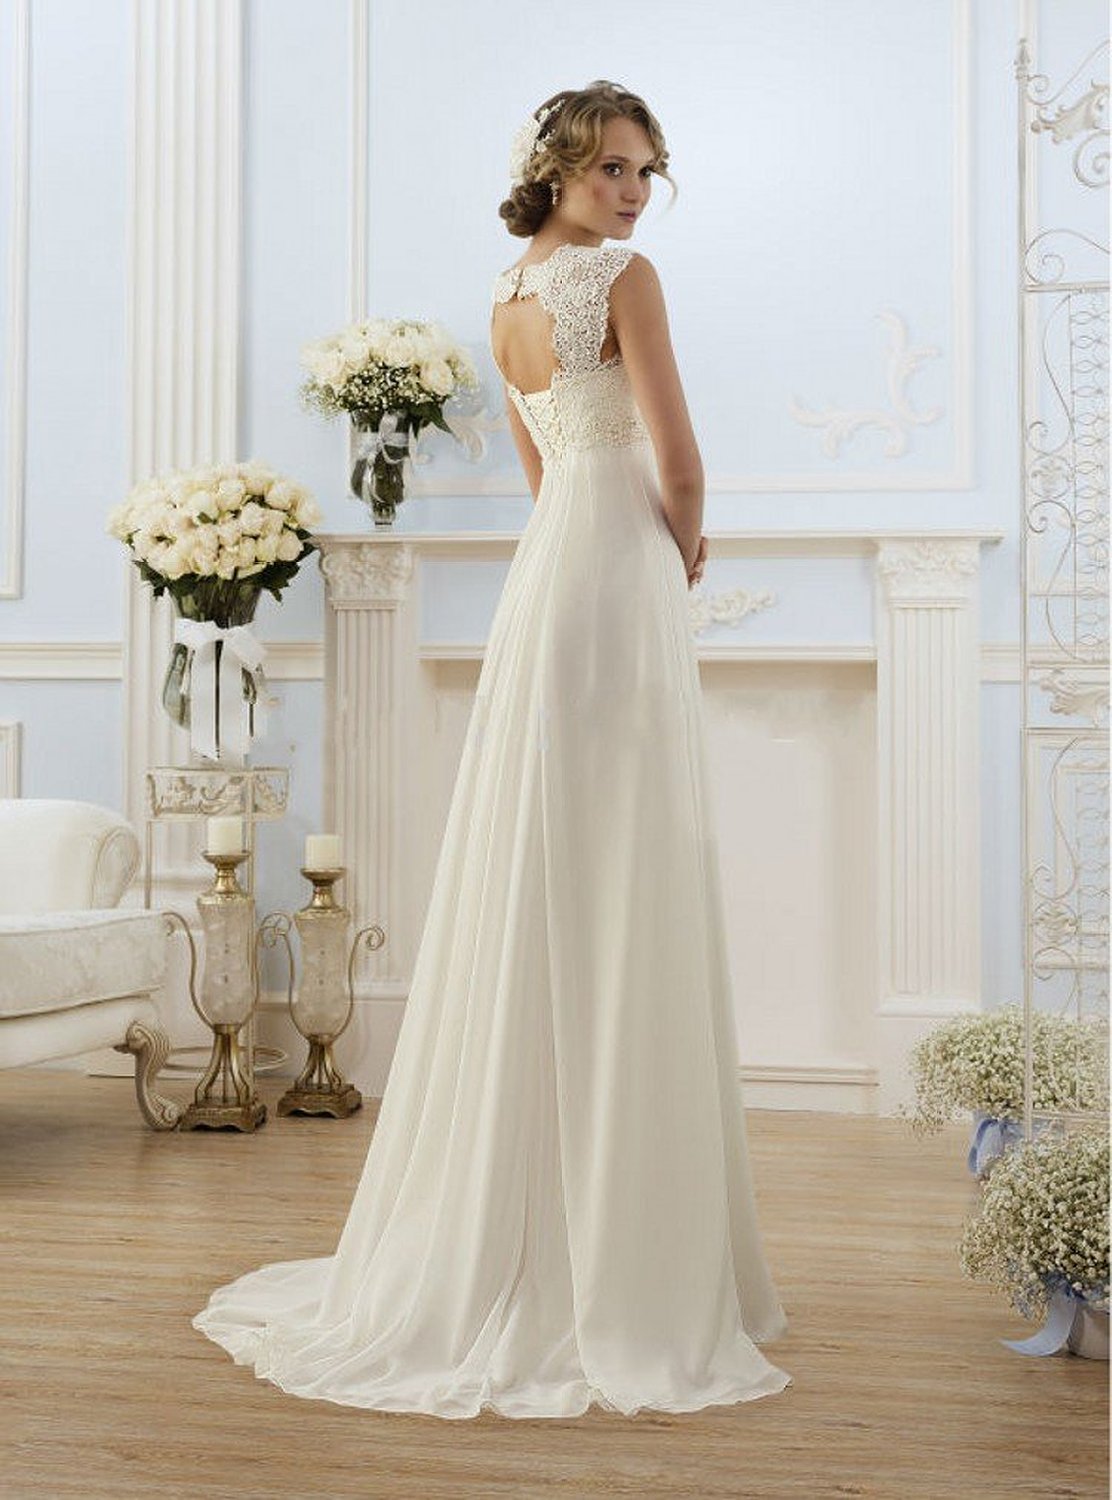 Elegant Cap Sleeves Empire Waist Lace Chiffon Beach Wedding Dress Key Hole Corset Back Dress 5318